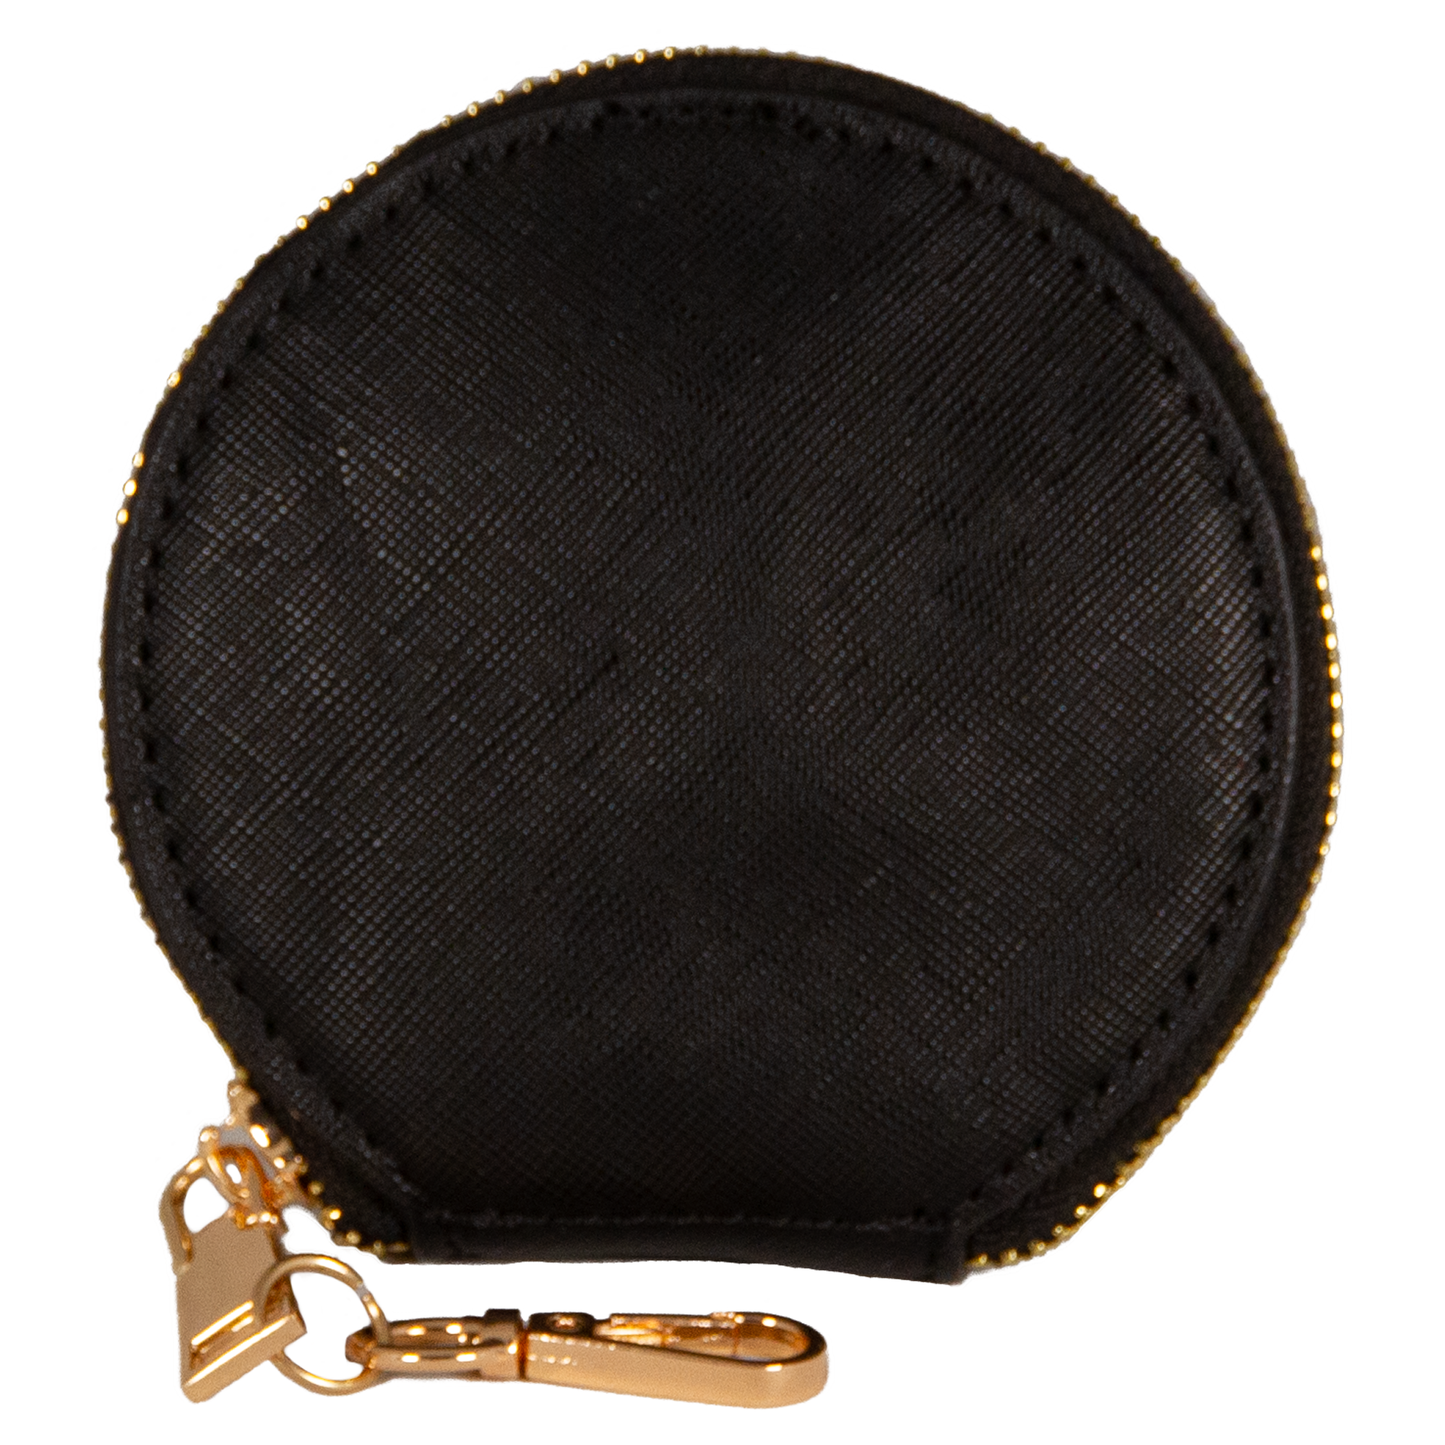 ONMZ Women's Tote Handbag - Black